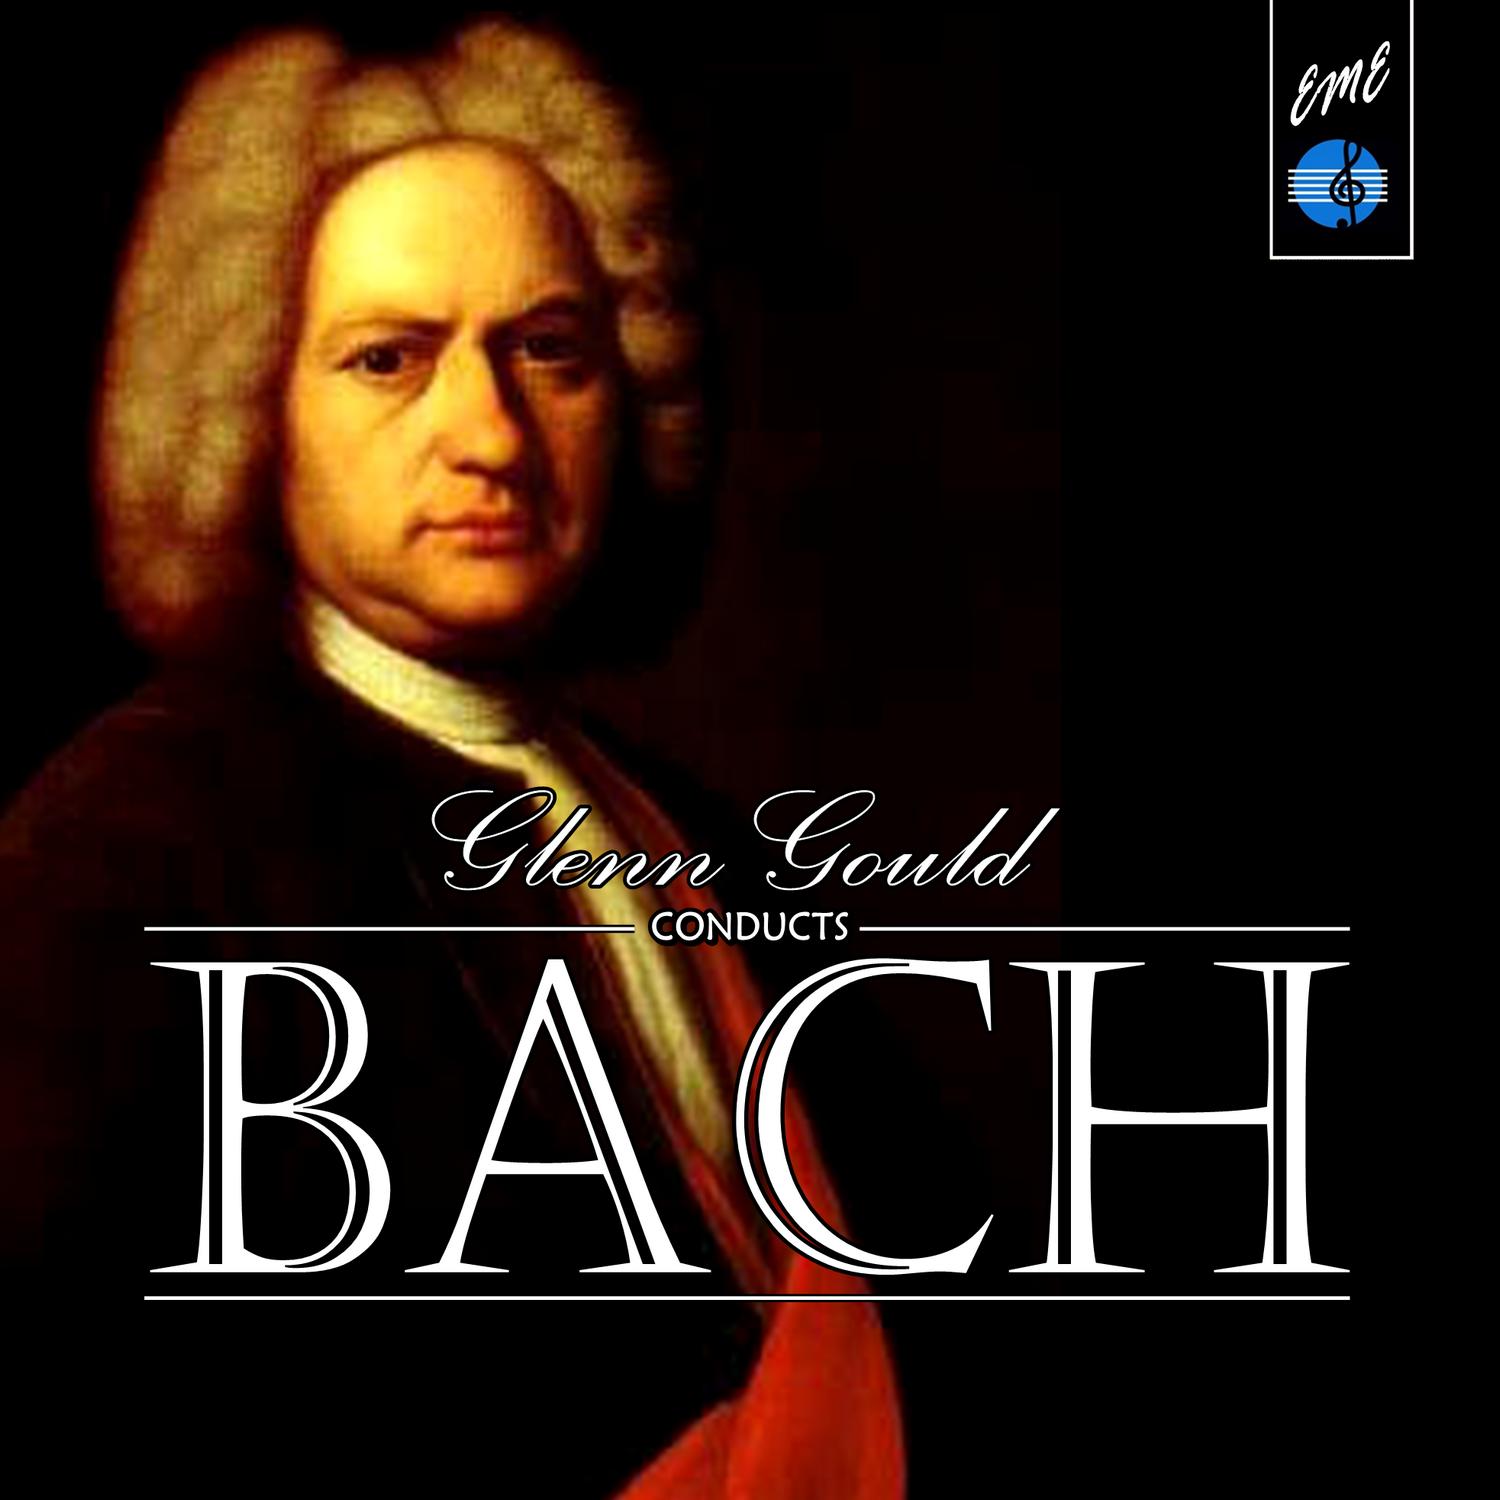 Glenn Gould Conducts Bach